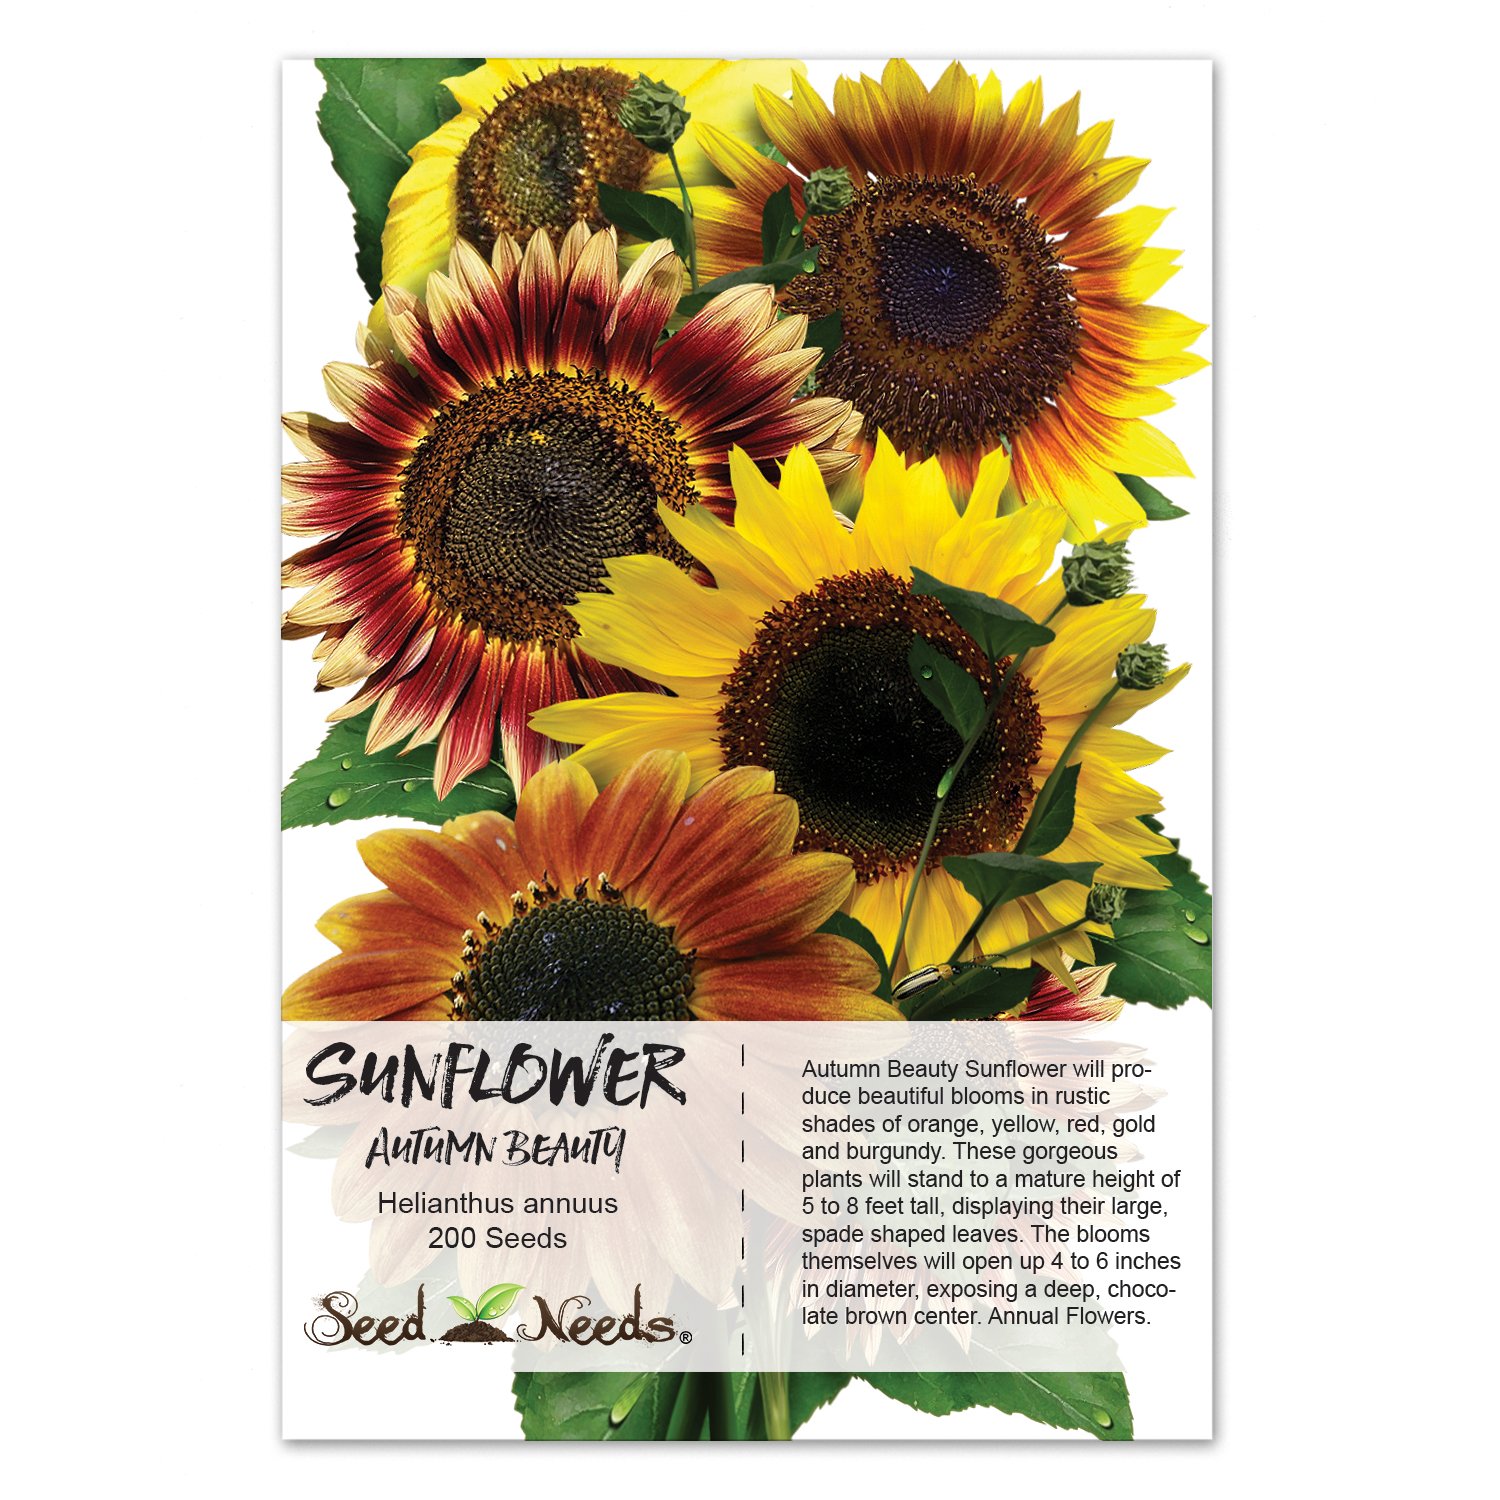 Autumn Beauty Sunflower Seeds (Helianthus annuus) - Seed Needs